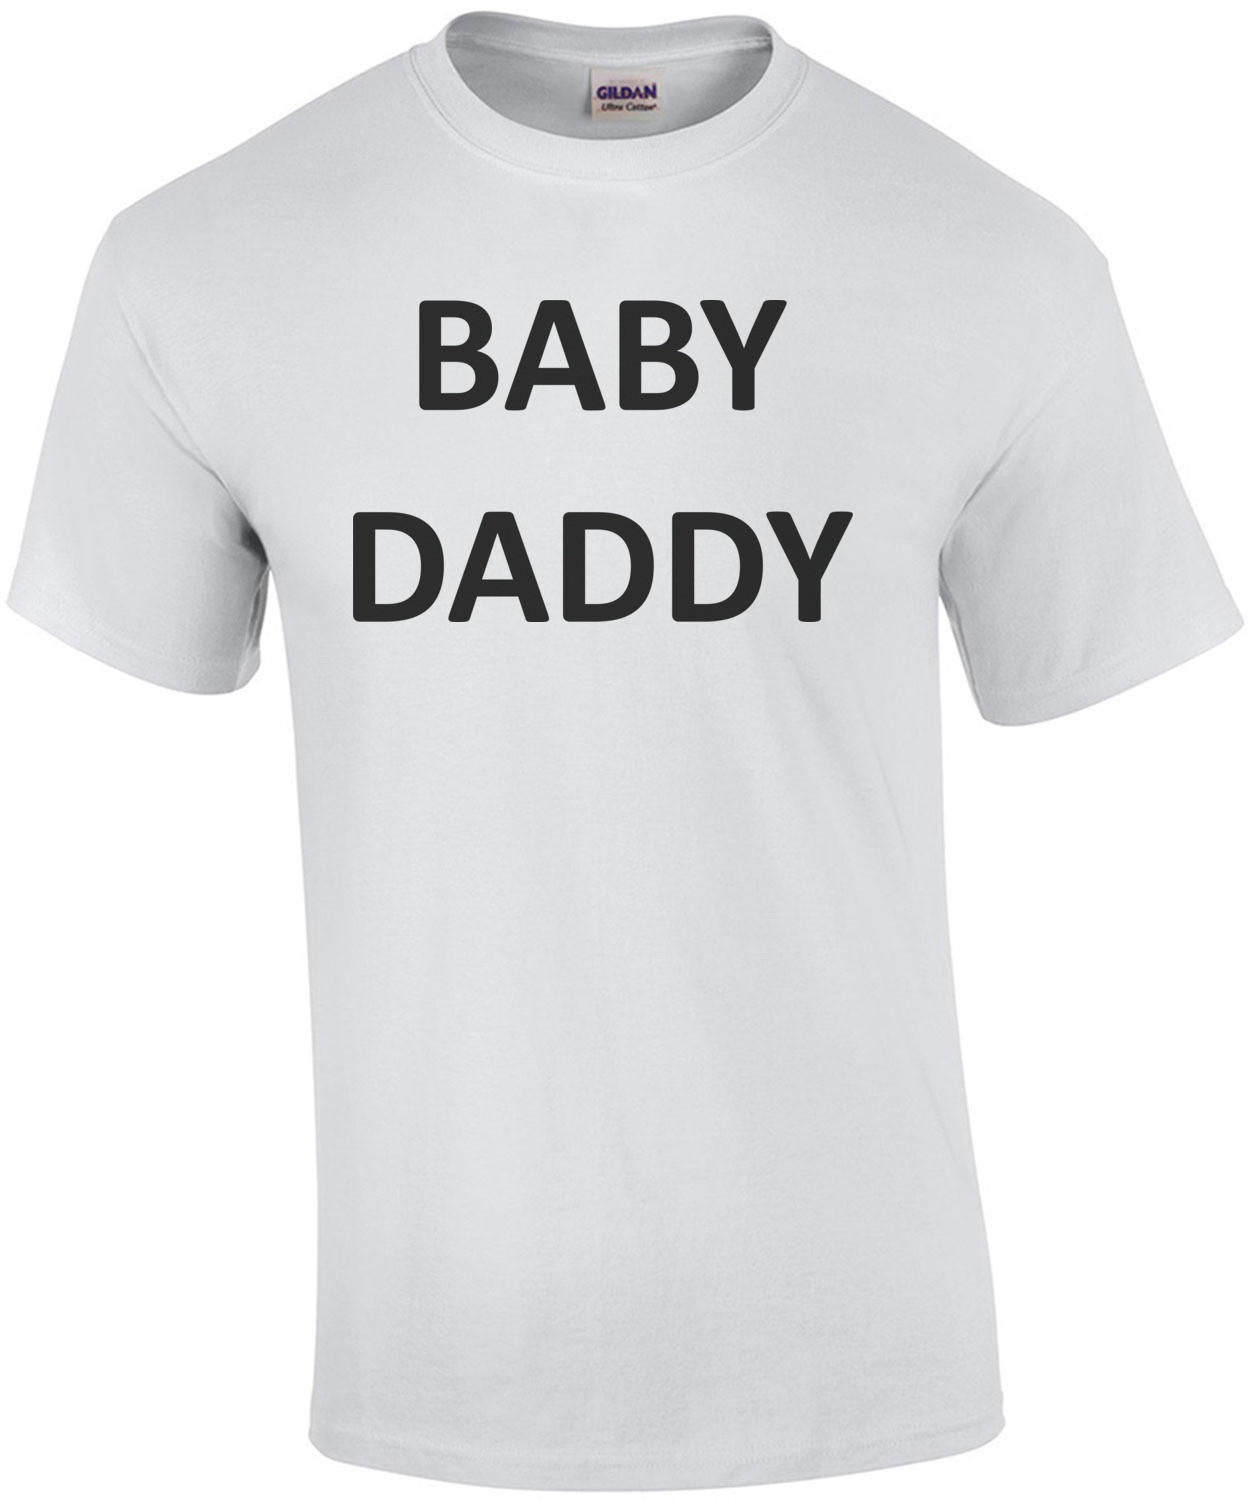 BABY DADDY T-Shirt